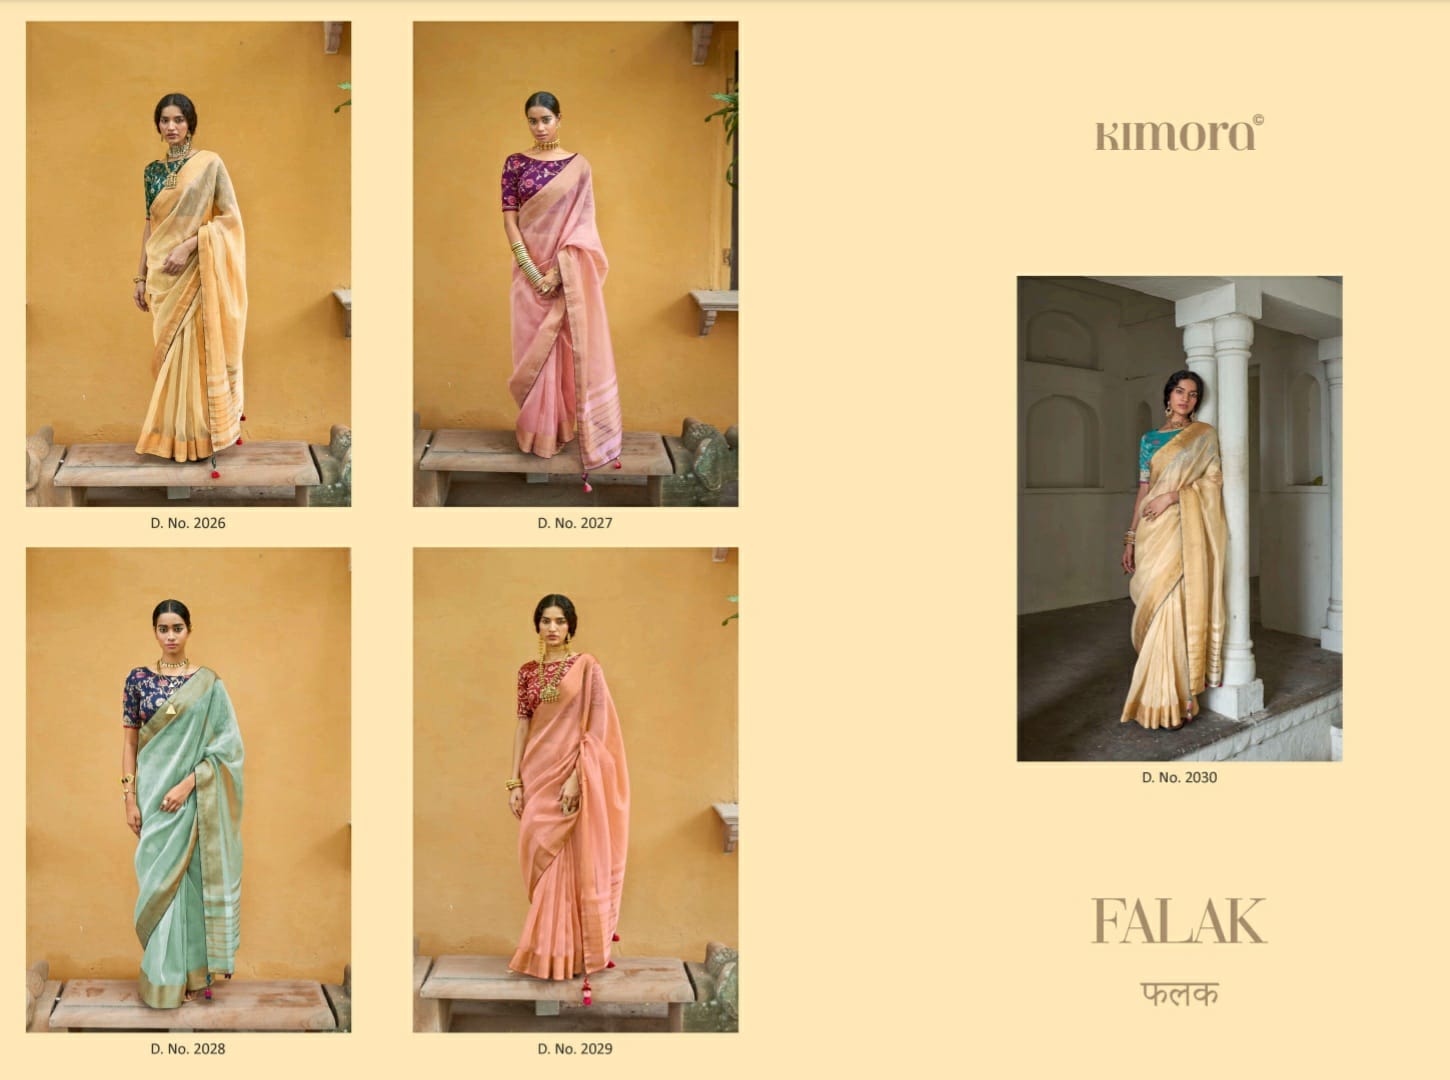 Kimora Falak collection 1